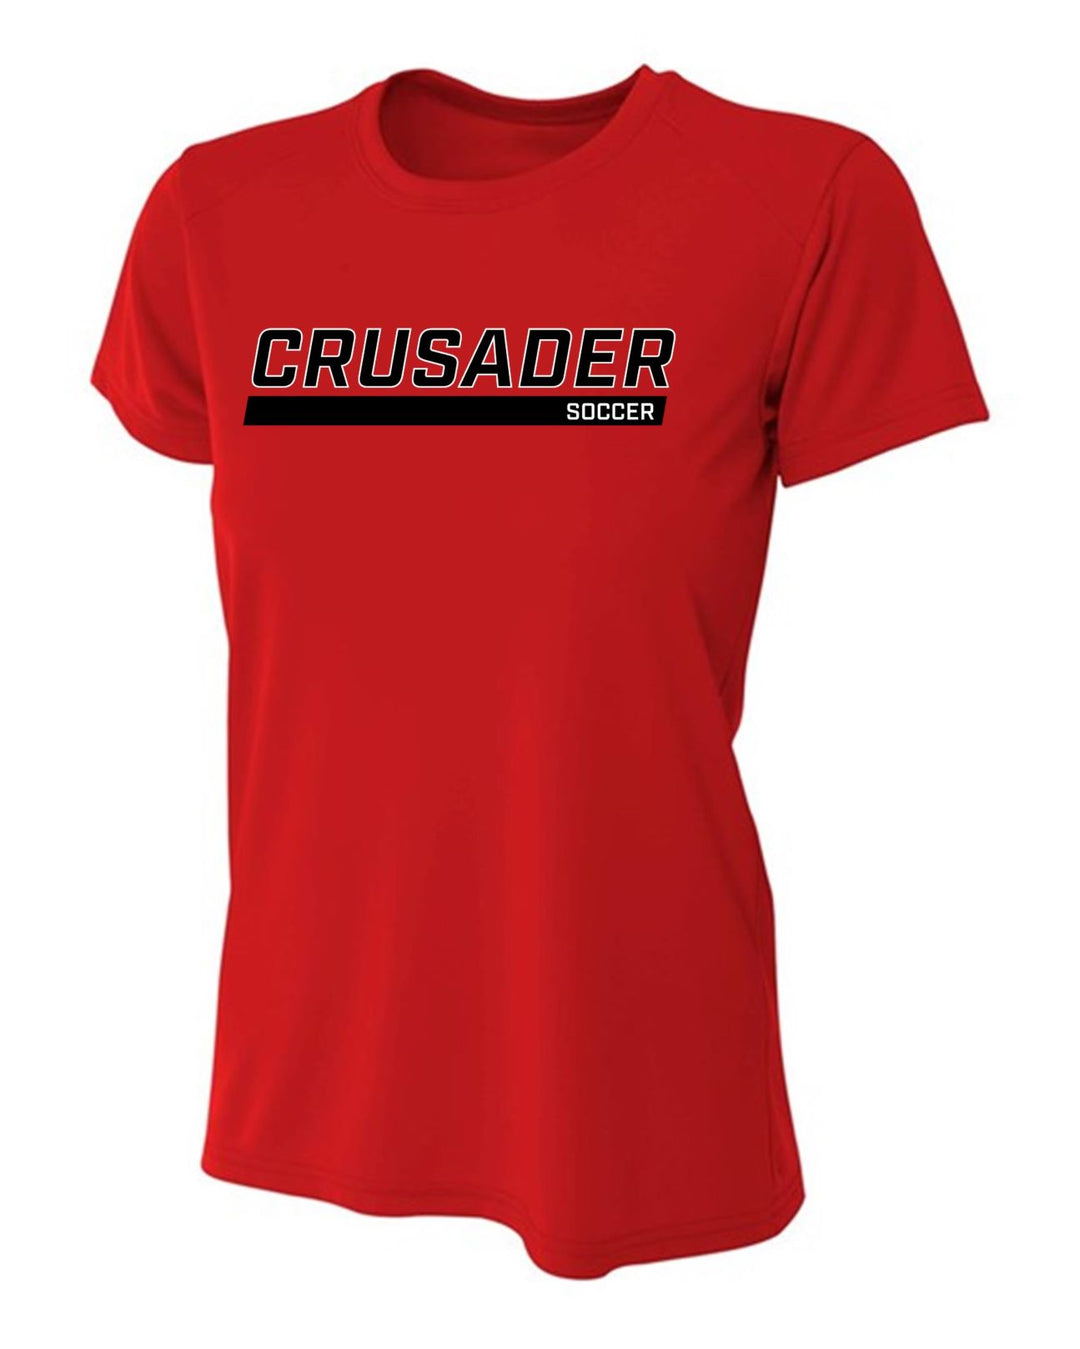 WCU Soccer Women's Short-Sleeve Performance Shirt WCU Soccer Red CRUSADER - Third Coast Soccer